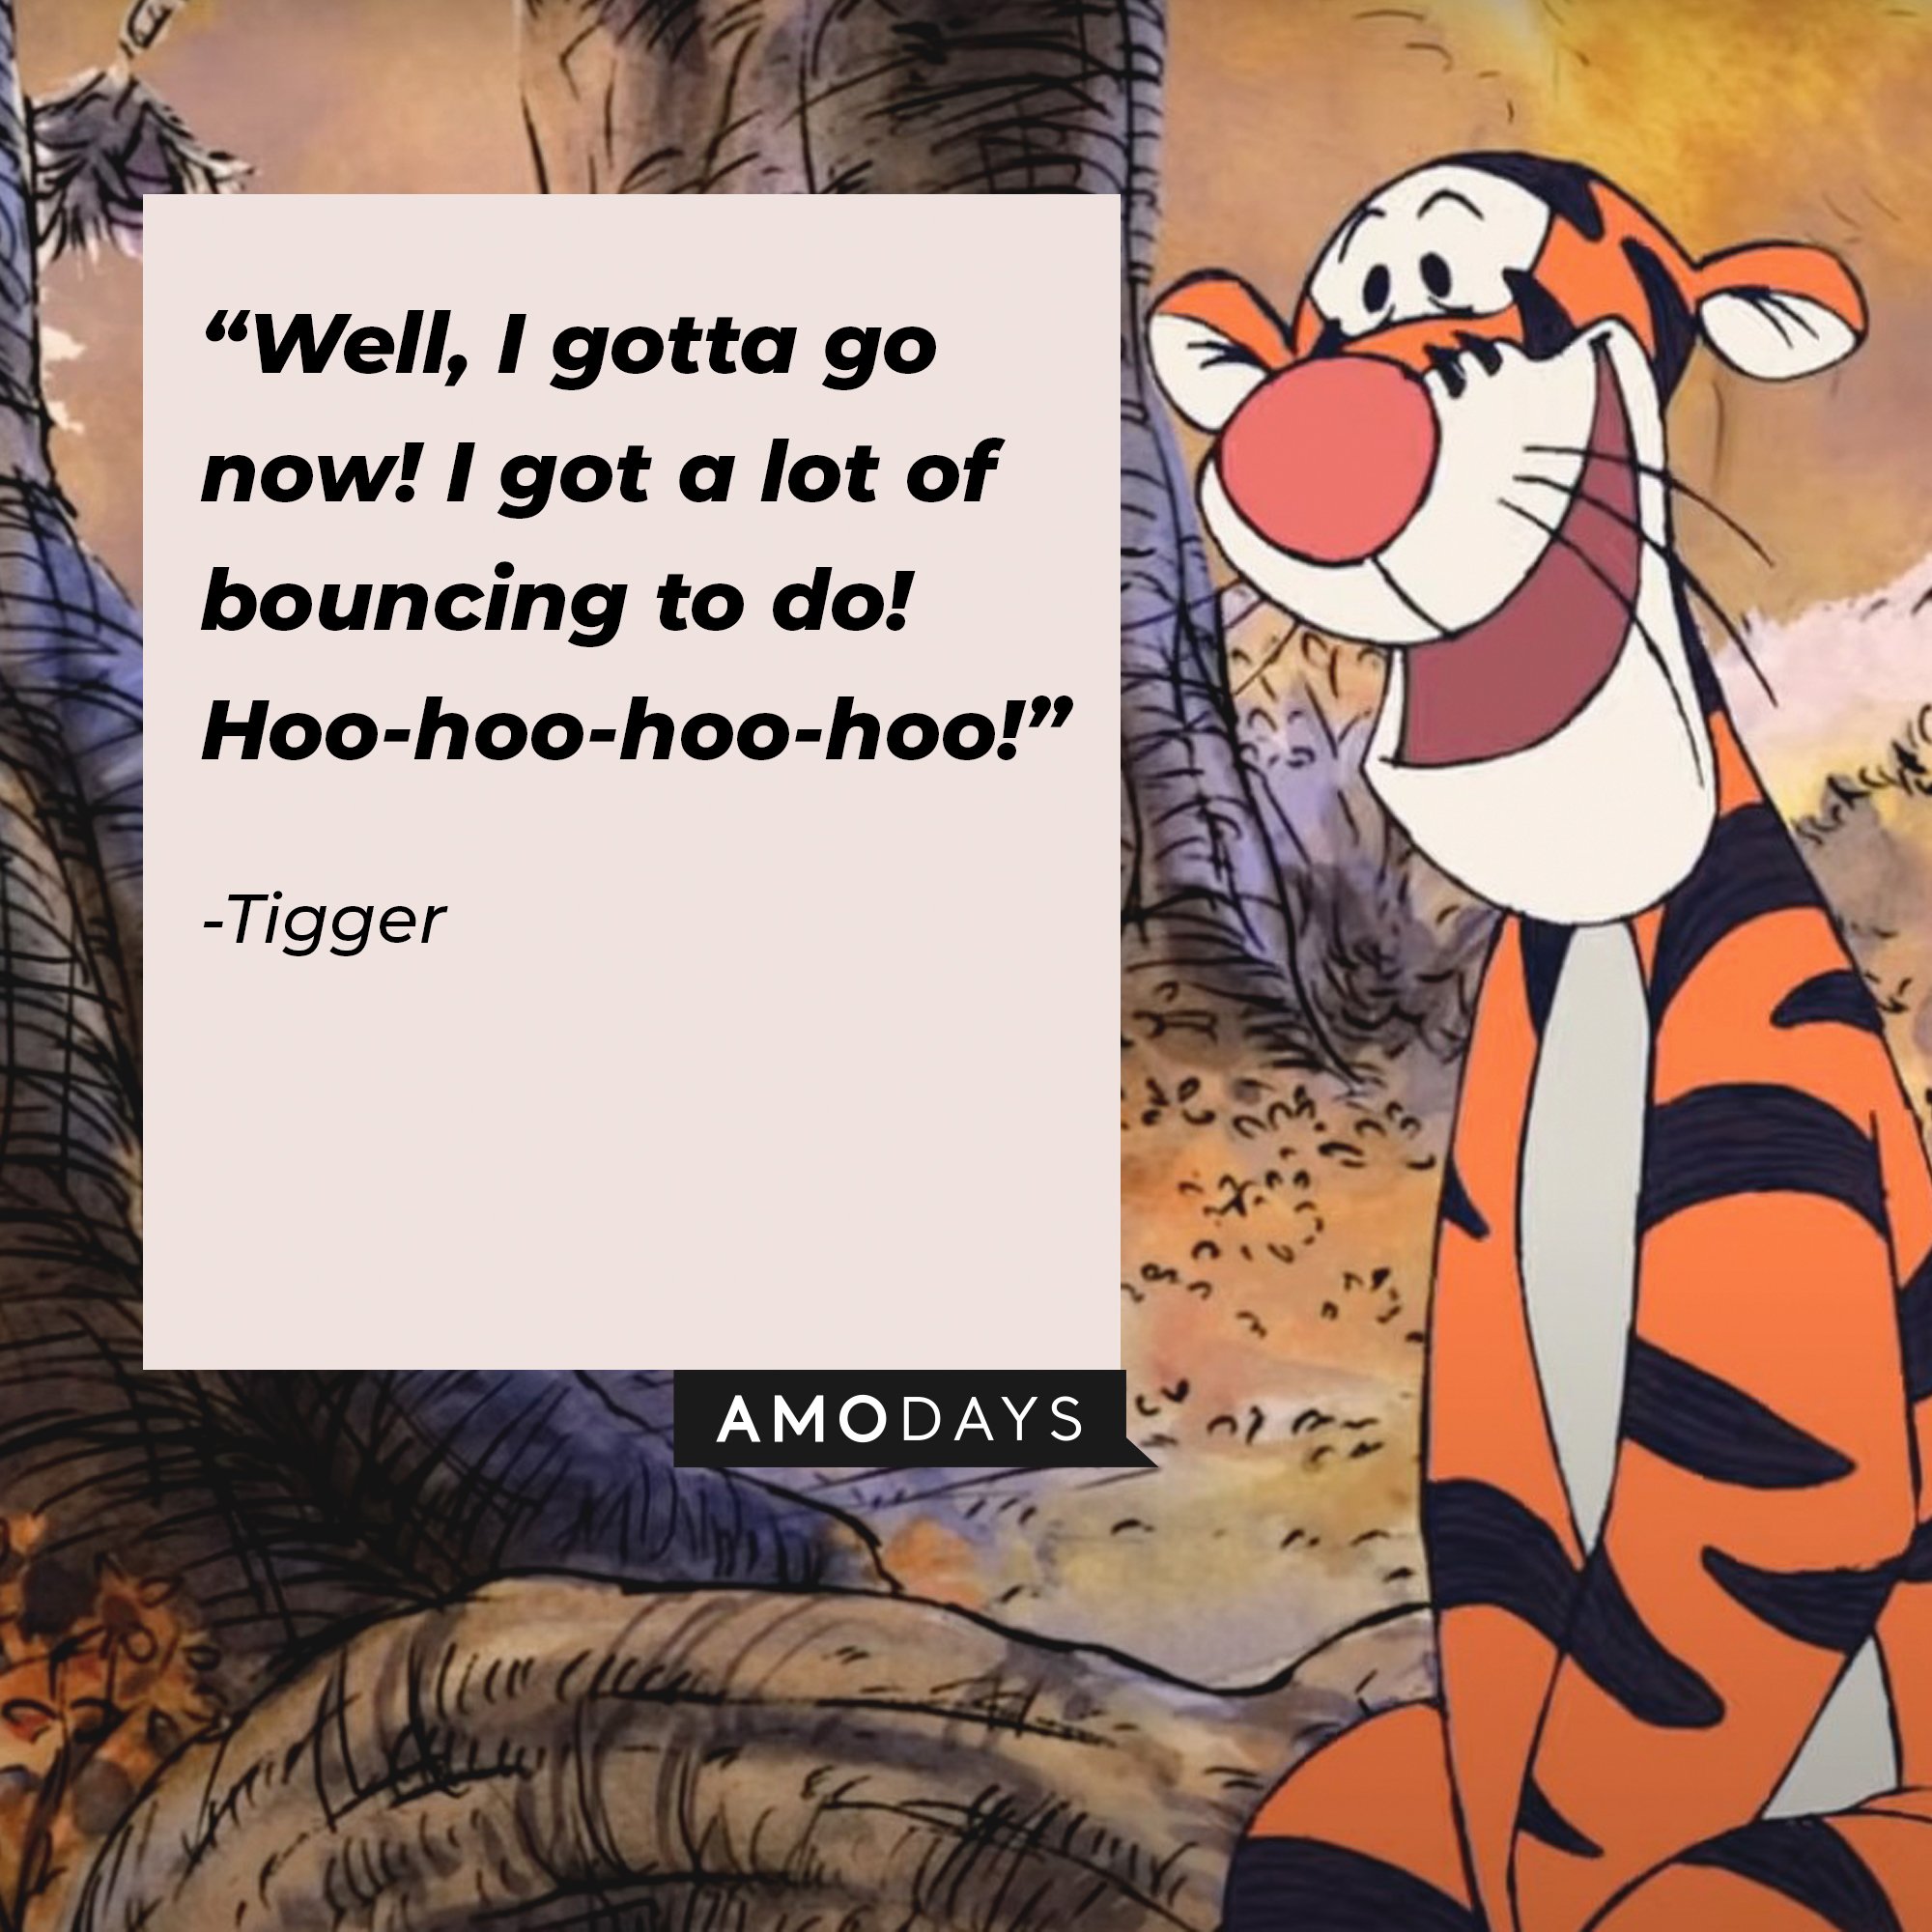  Tigger's quote: "Well, I gotta go now! I got a lot of bouncing to do! Hoo-hoo-hoo-hoo!" | Image: AmoDays